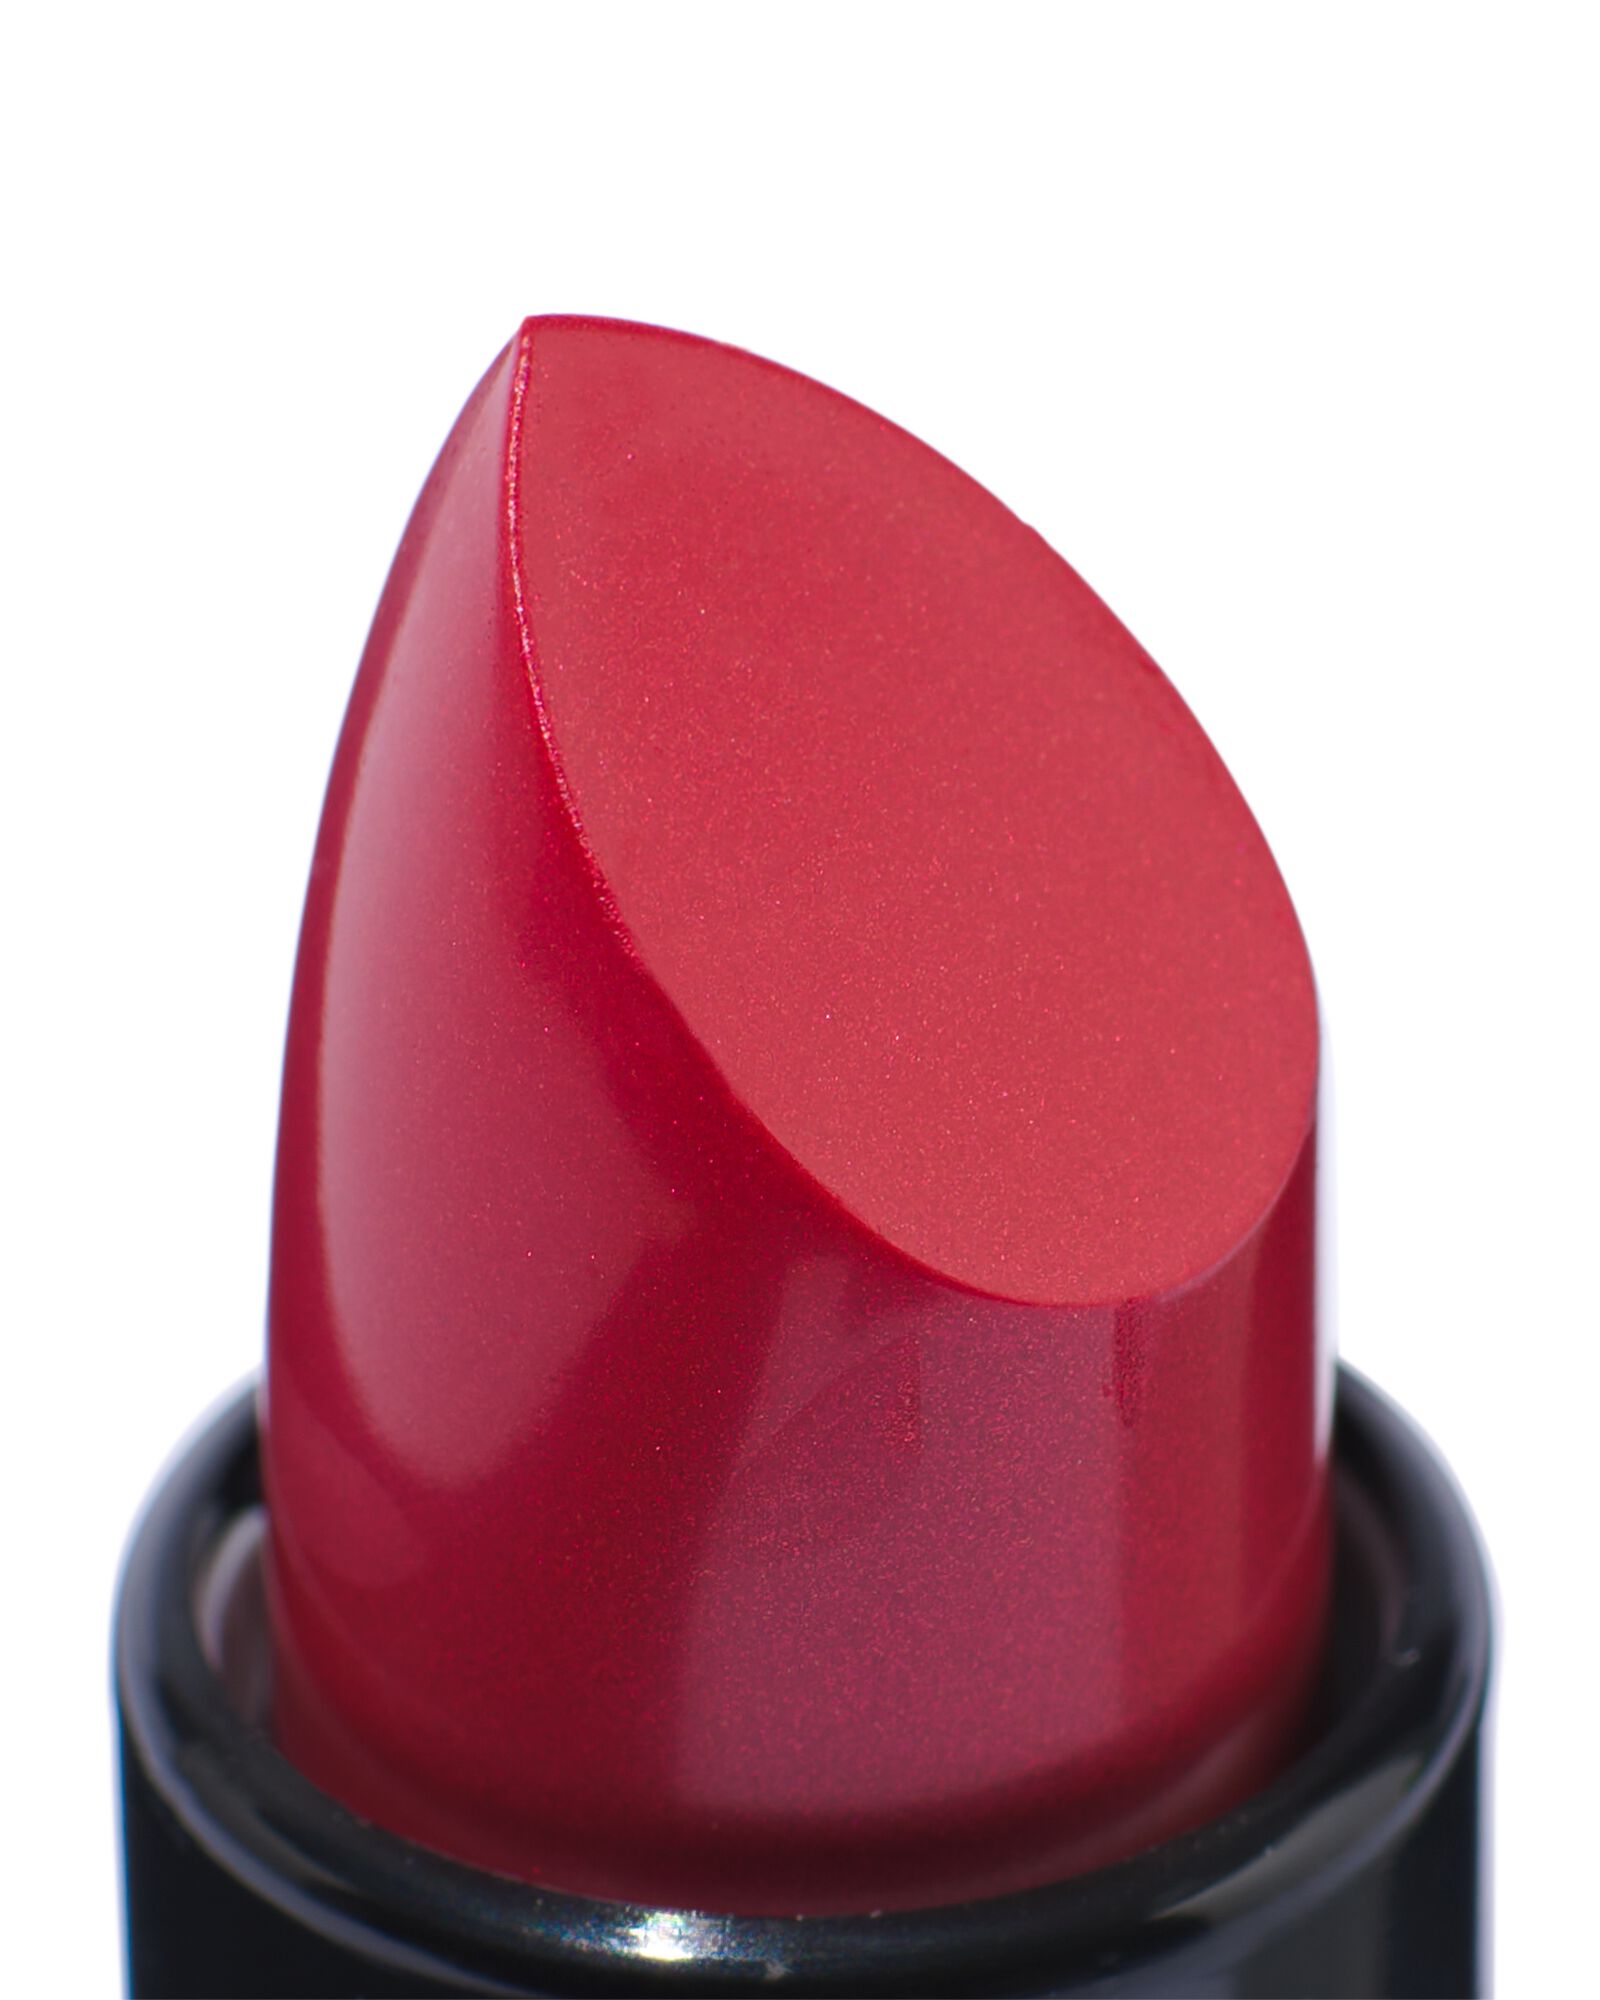 HEMA Moisturising Lipstick 18 Moody Merlot - Satin Finish (rouge foncé)